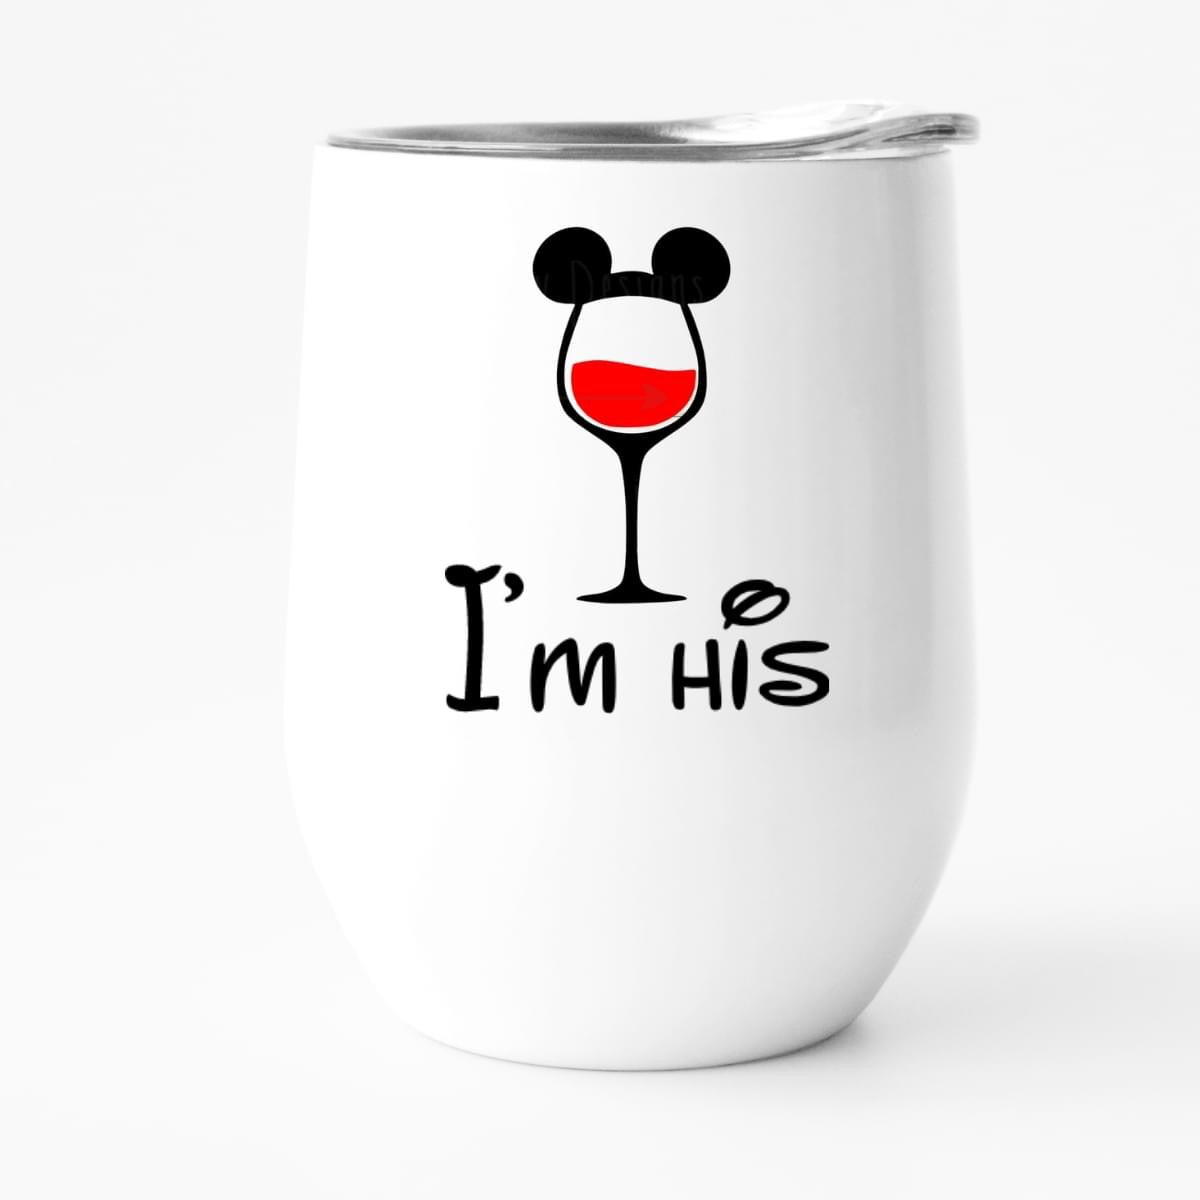 I Wine Because…